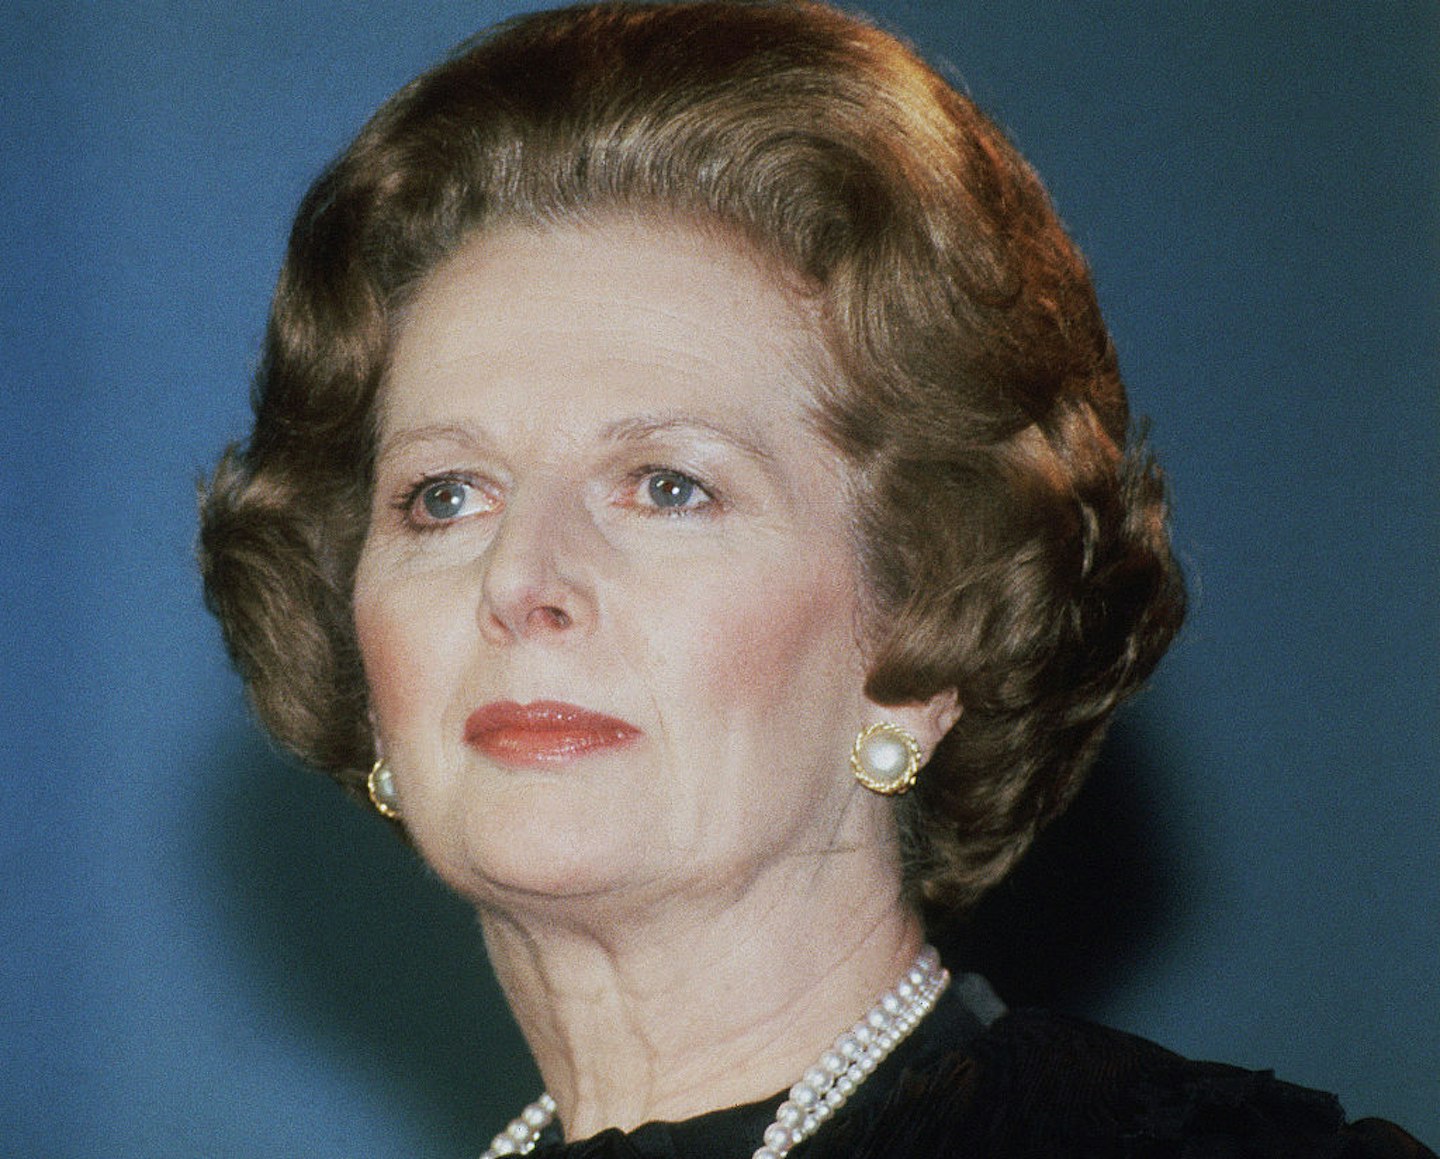 Margaret Thatcher in the 1980s